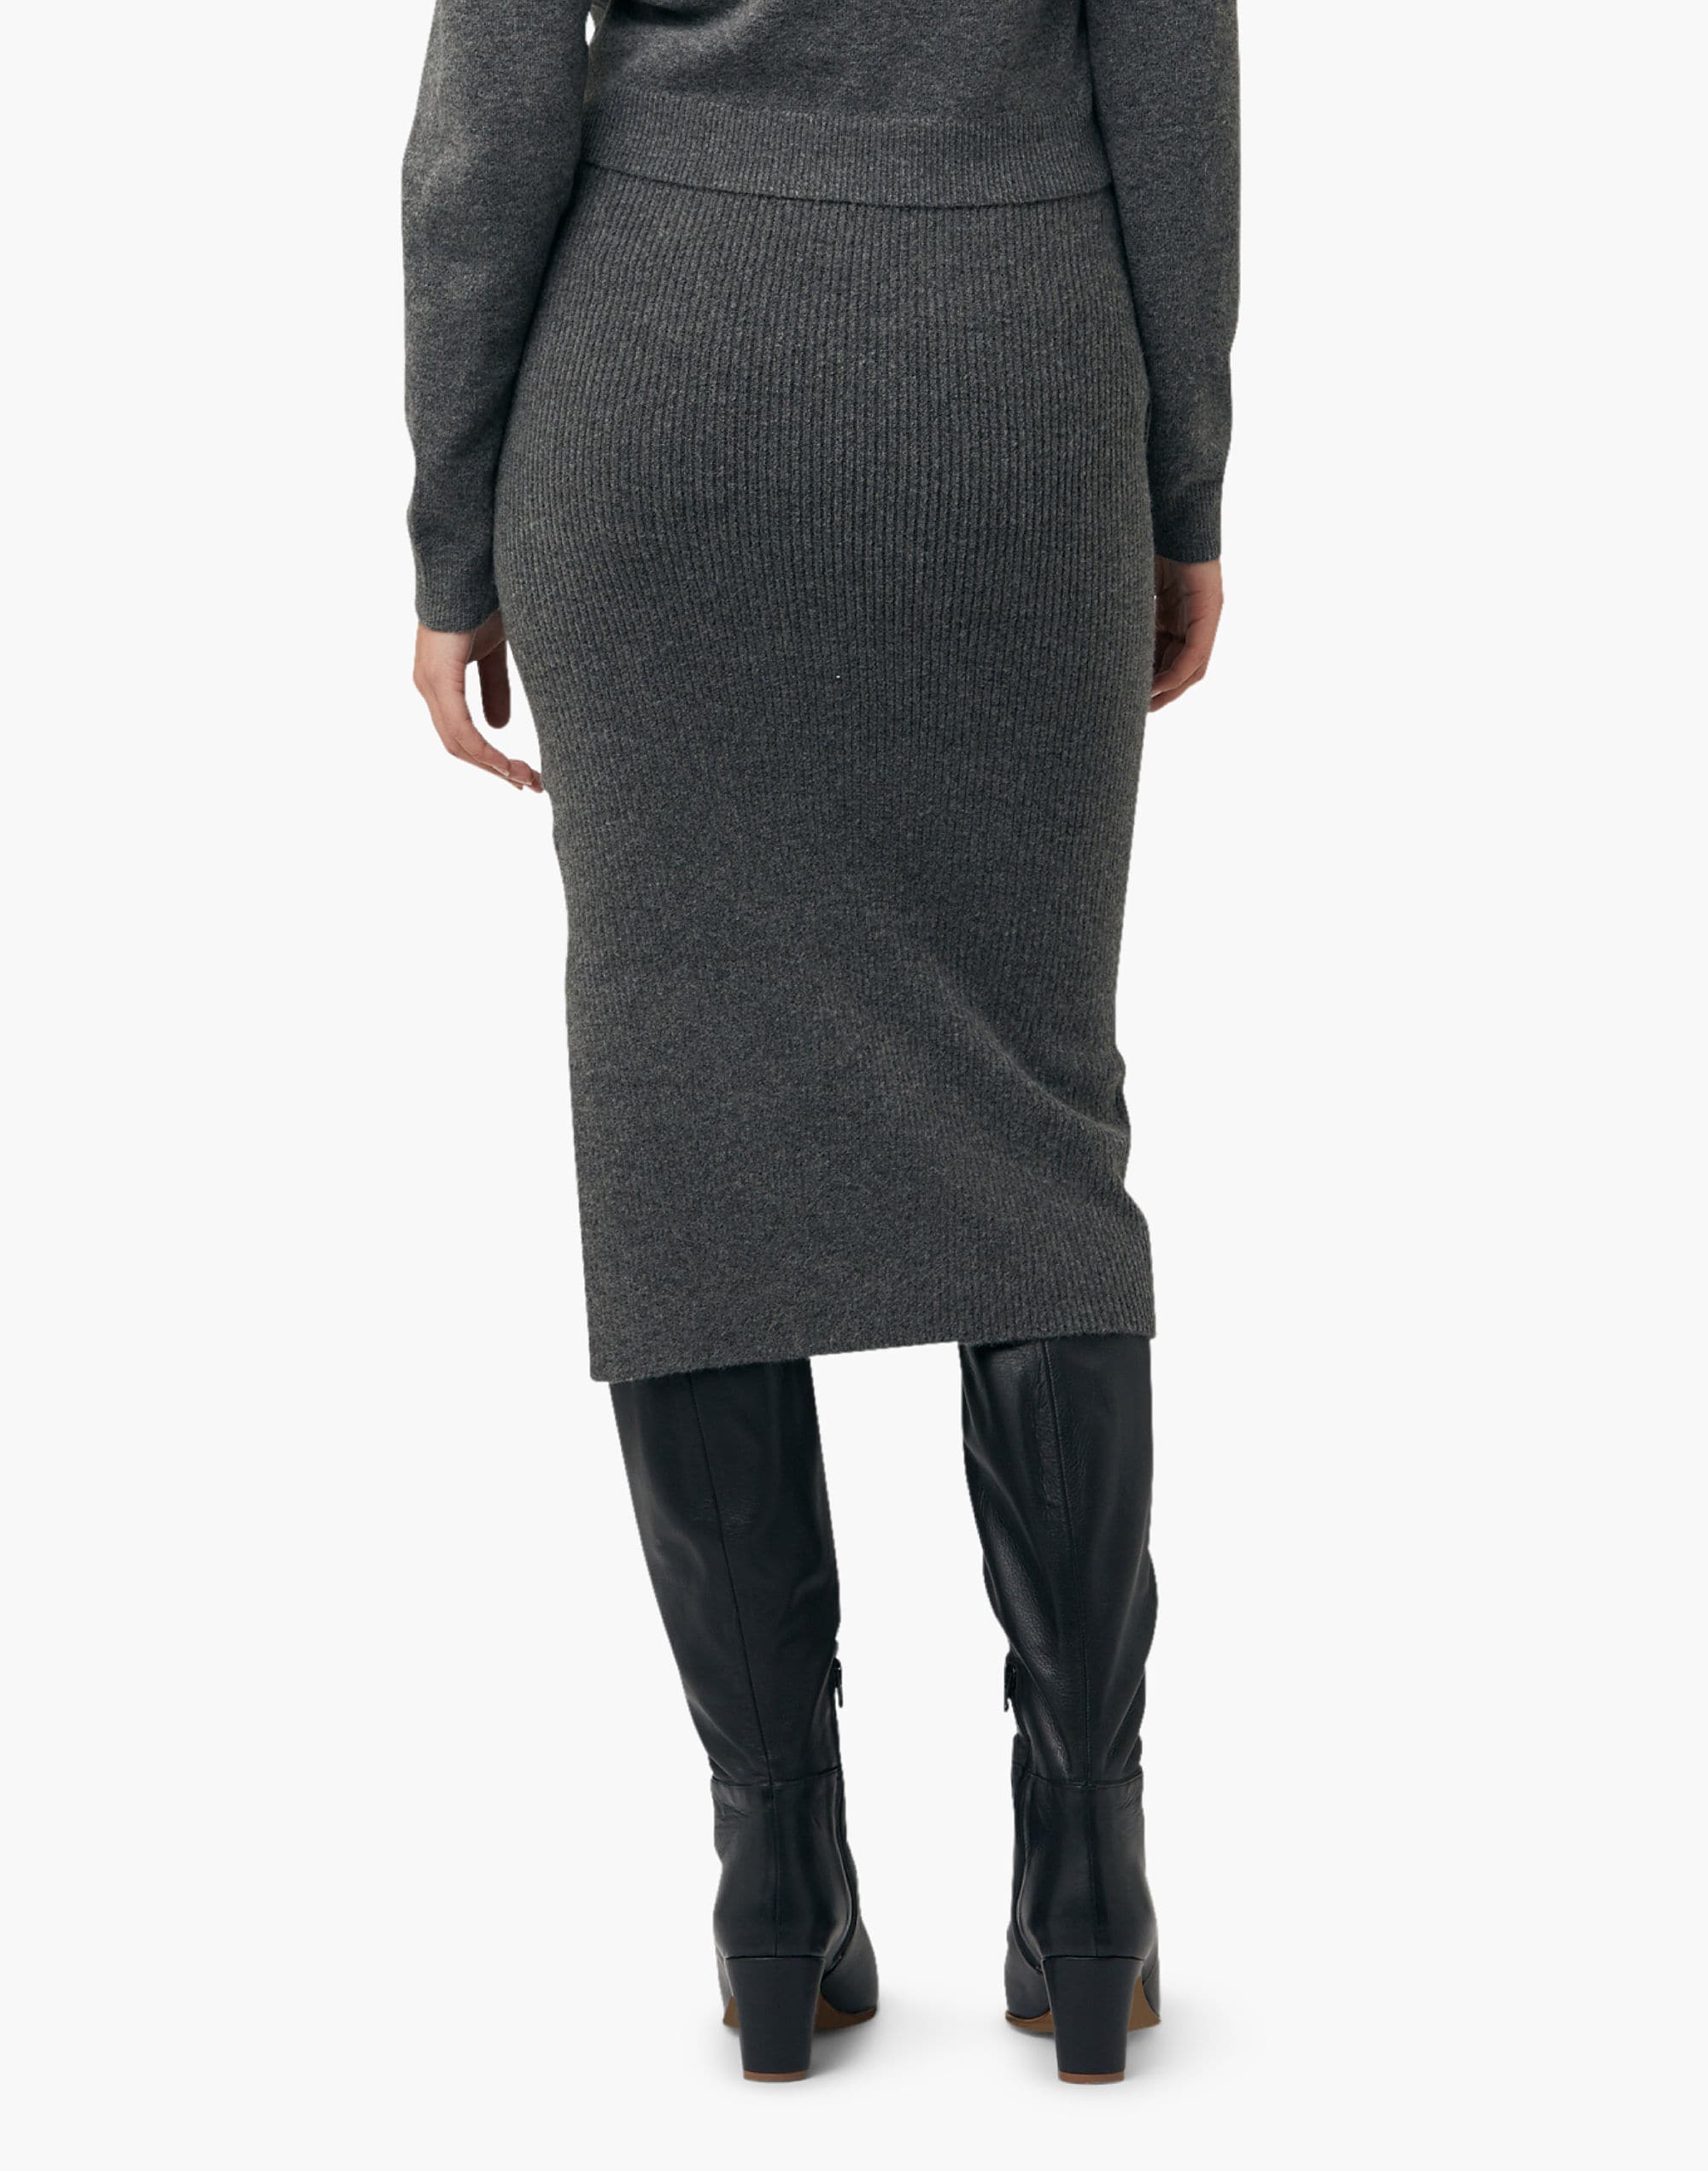 Ripe Maternity Dani Knit Skirt